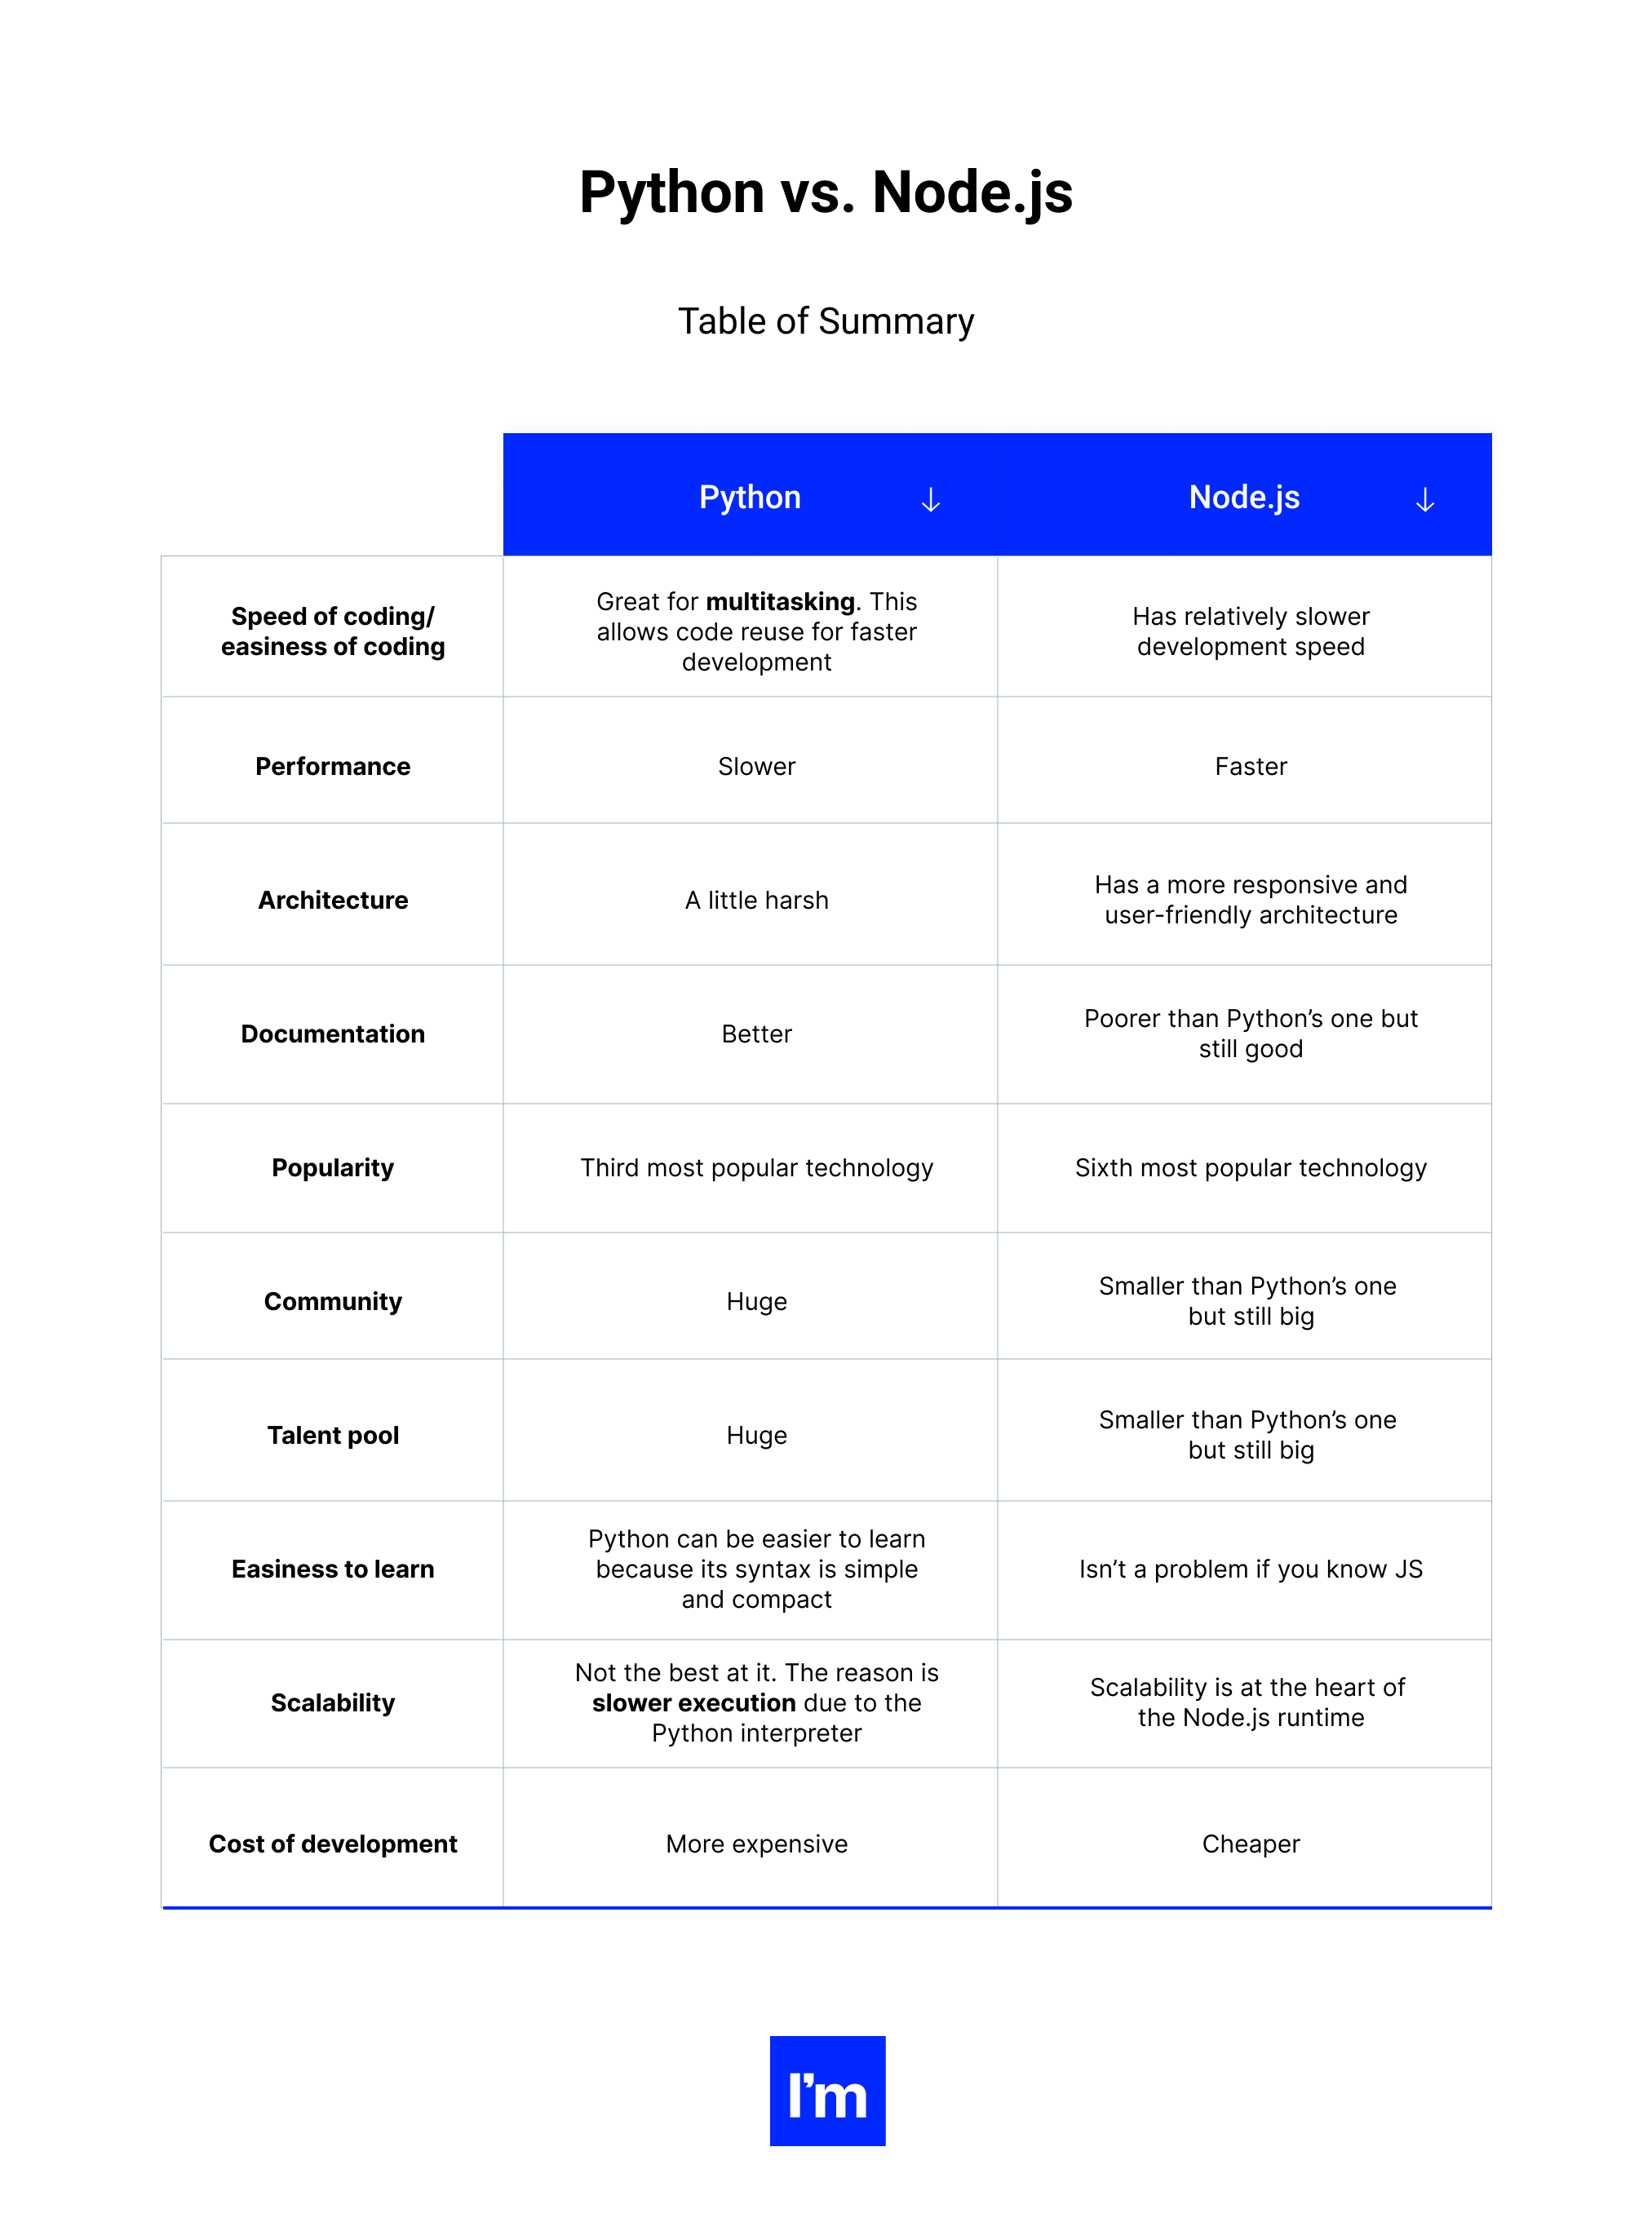 Python vs Node.js -Table 4 - Python VS. Node.js